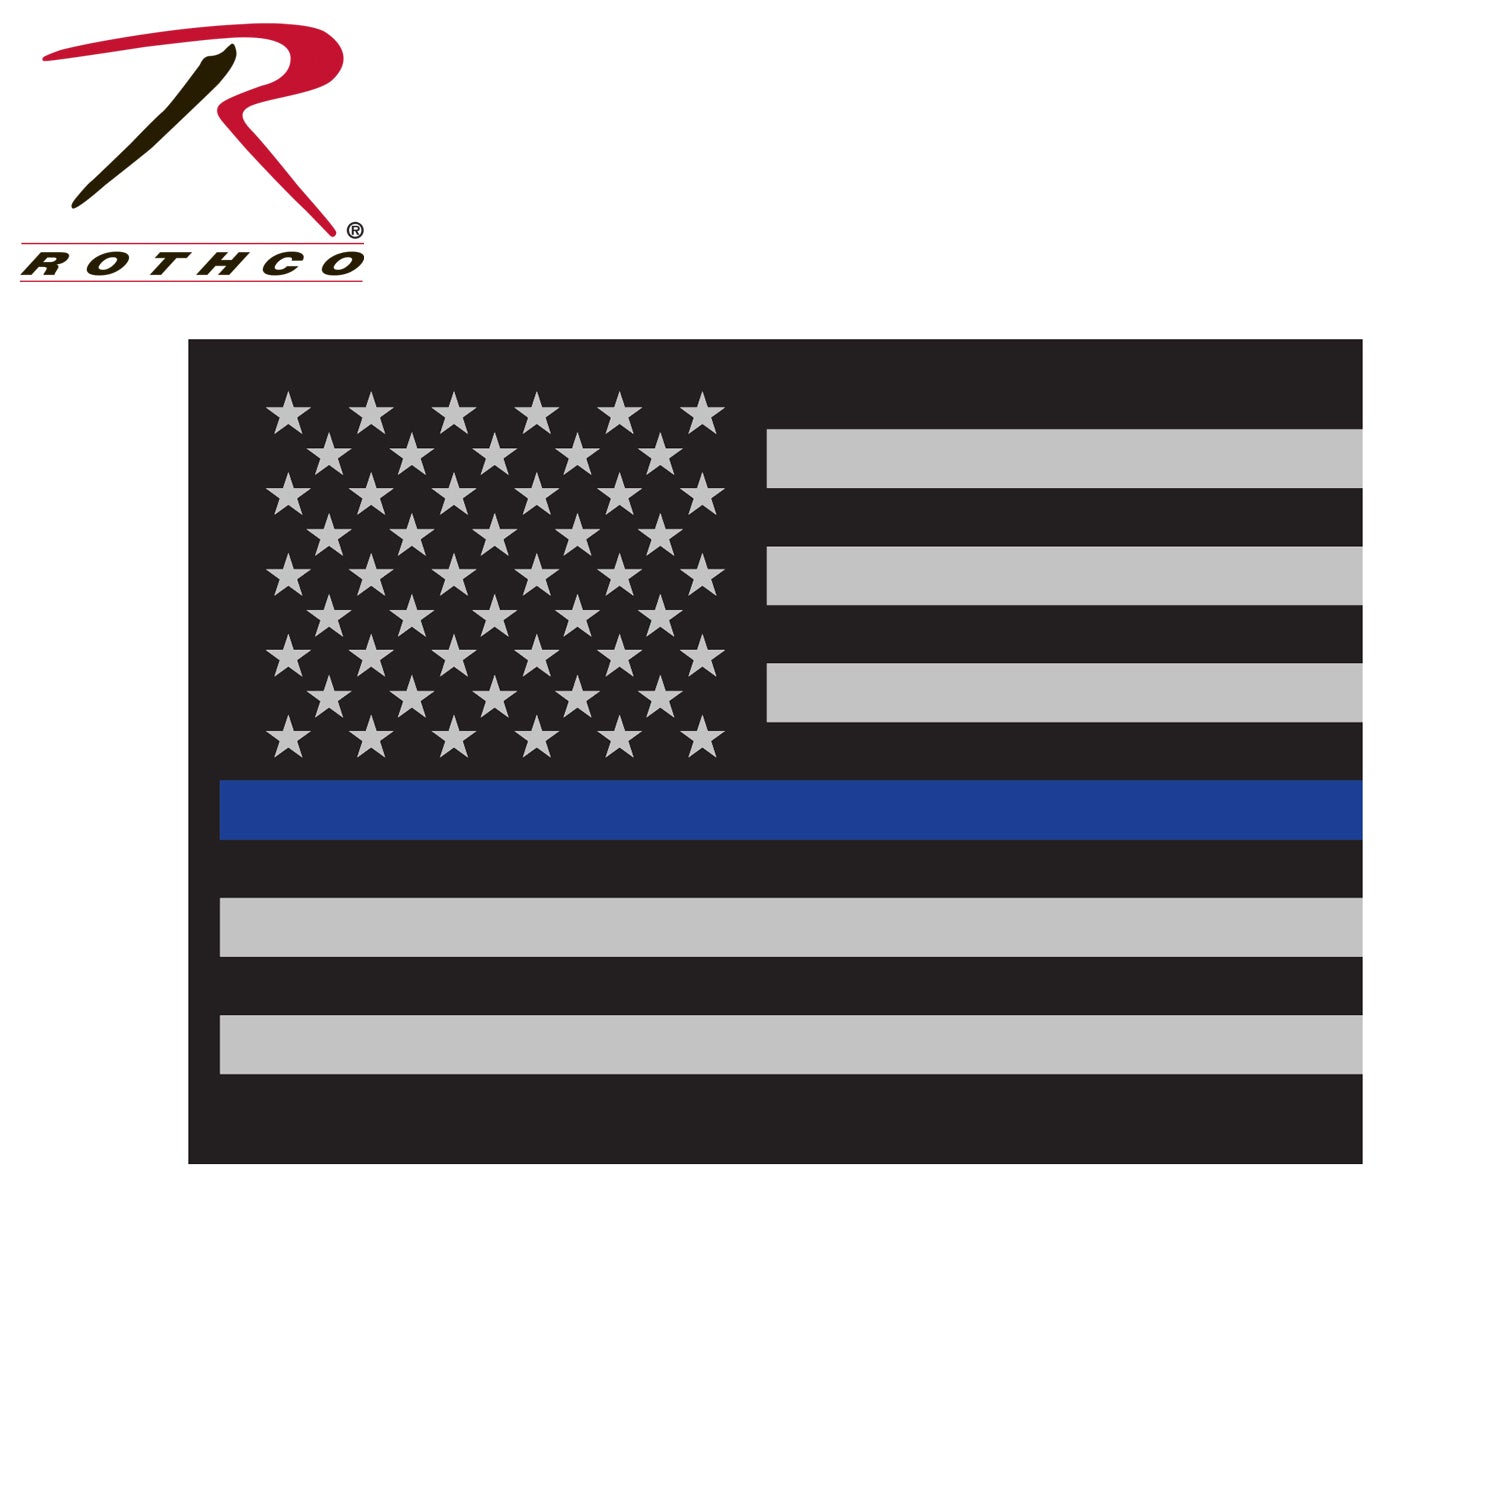 Rothco Thin Blue Line Flag Decal 3" X 4-1/4"